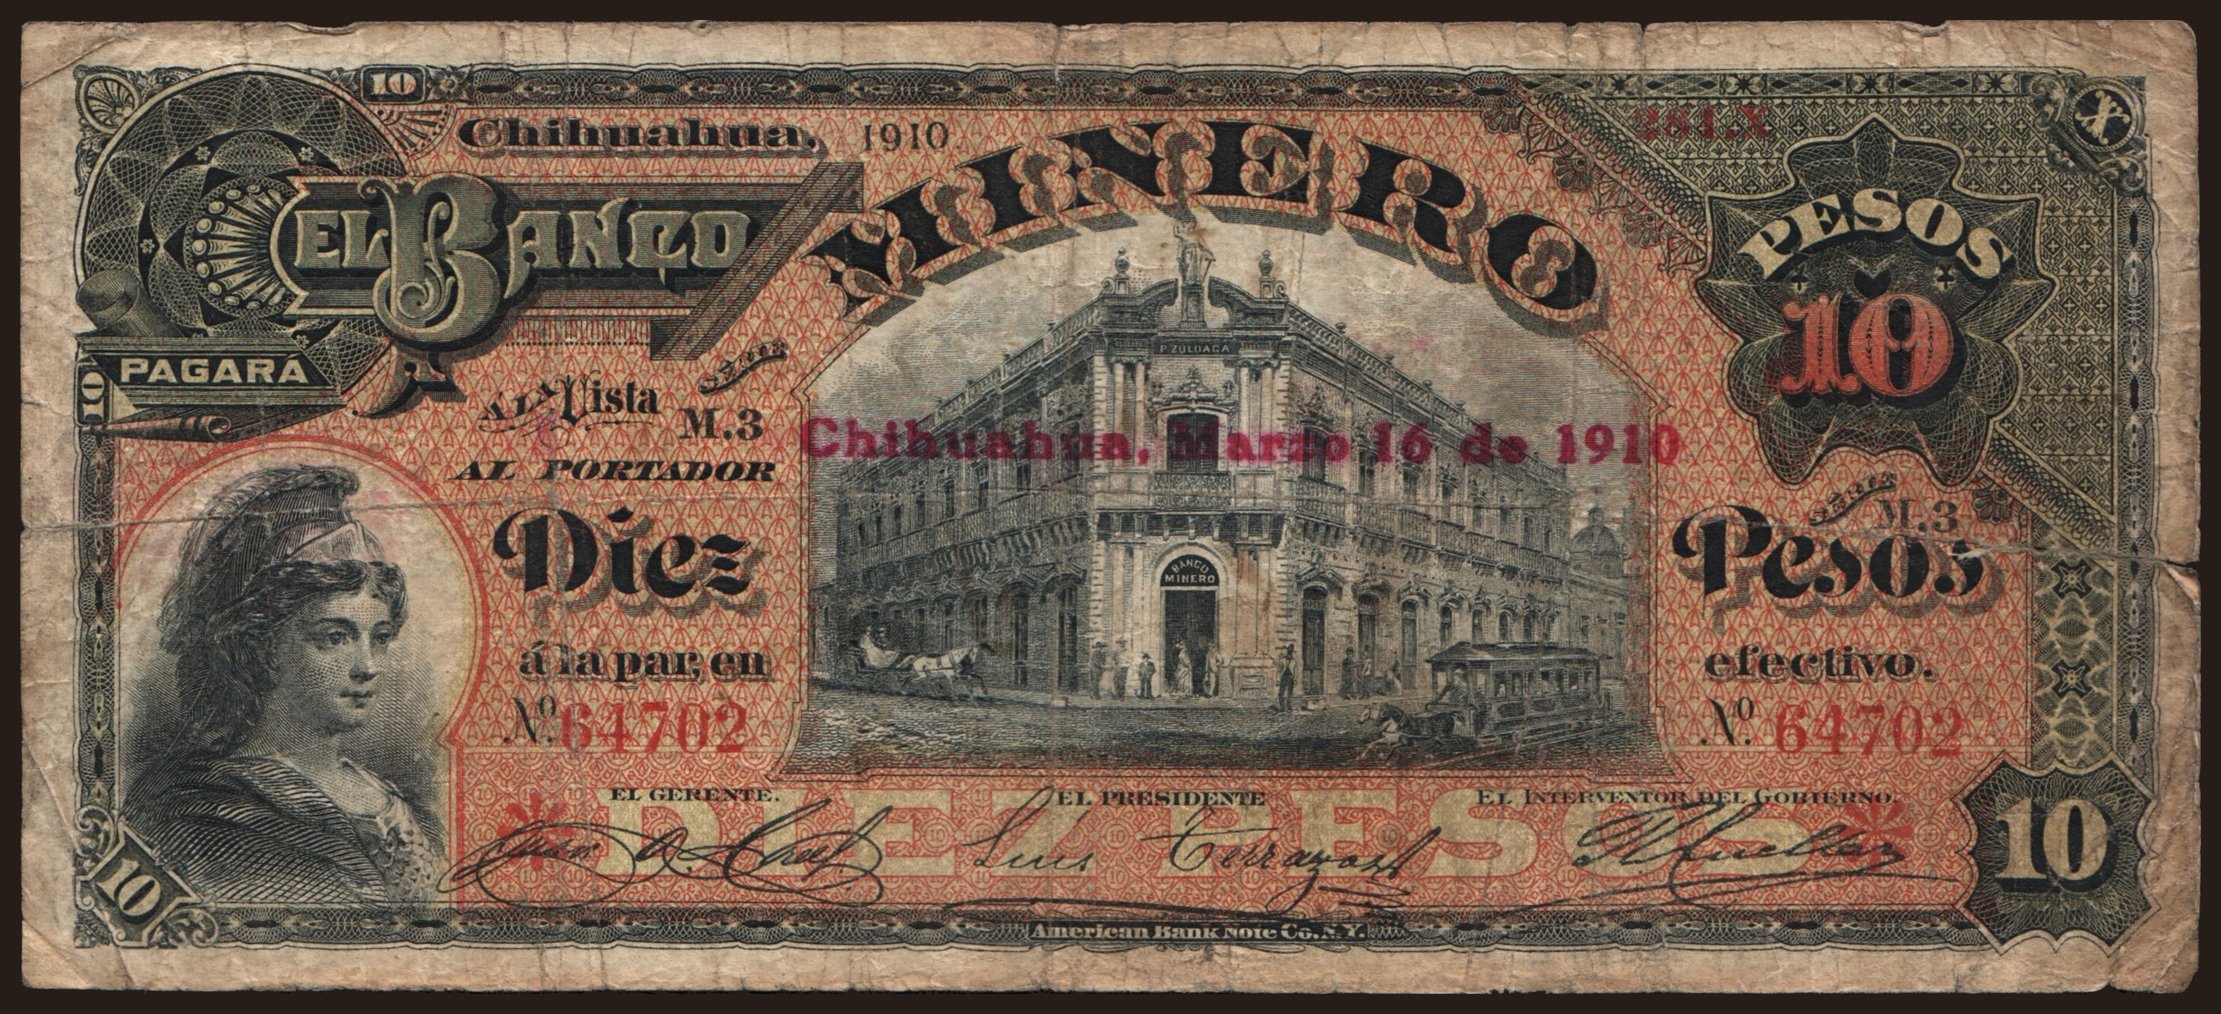 Chihuahua/ El Banco Minero, 10 pesos, 1910